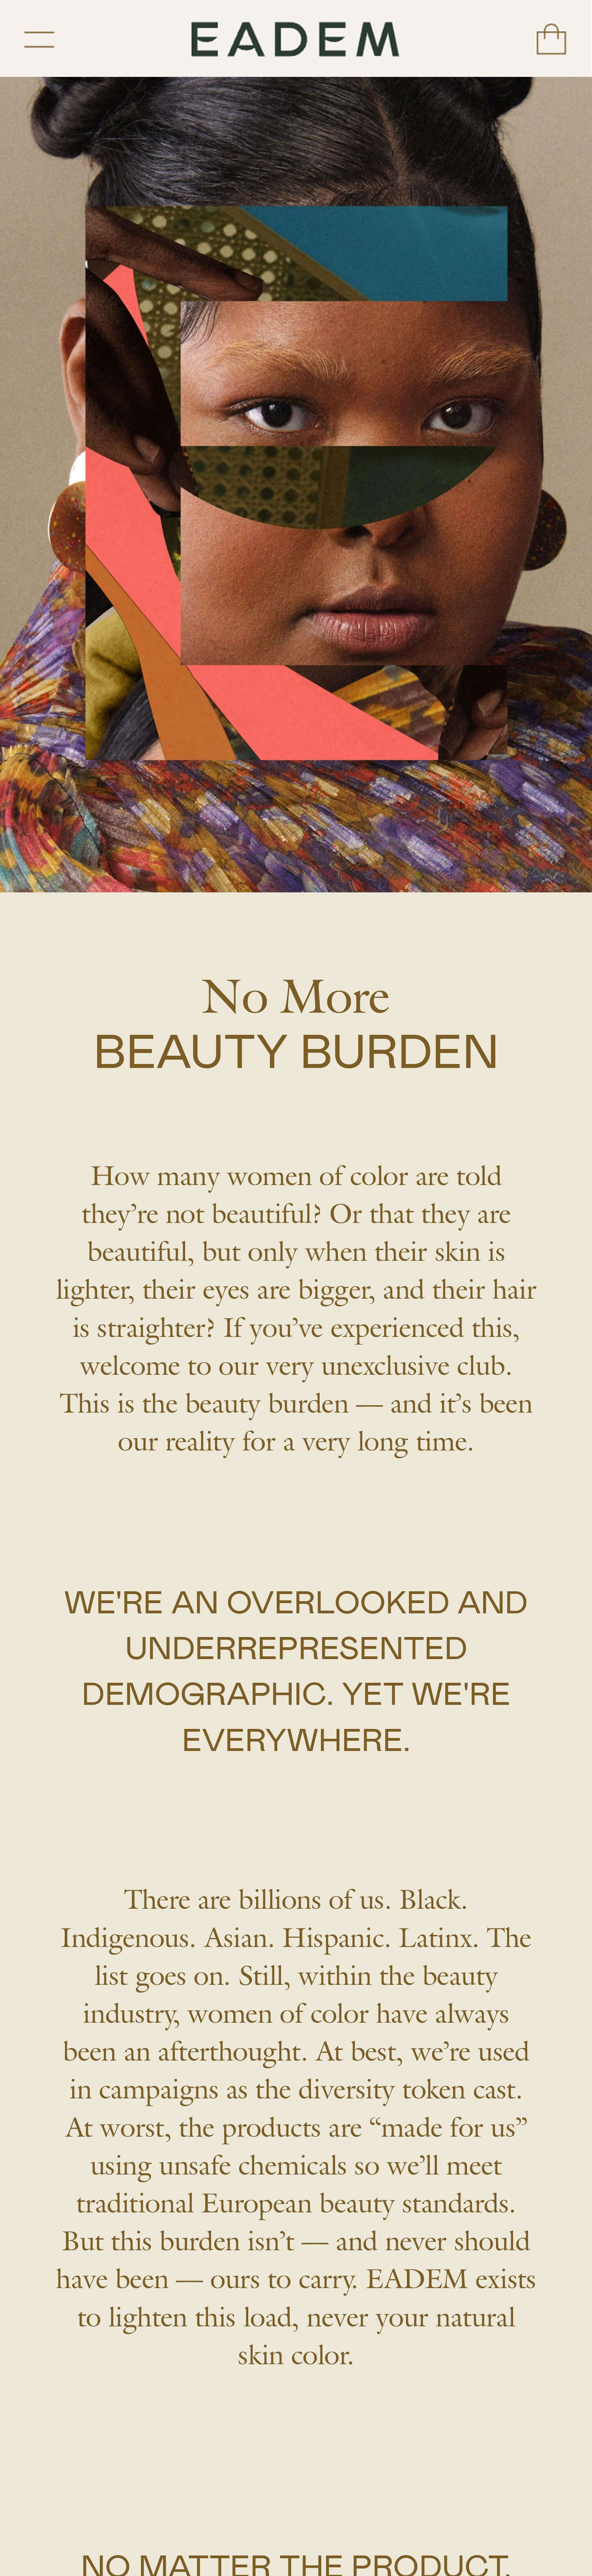 Eadem beauty burden page mobile layout preview